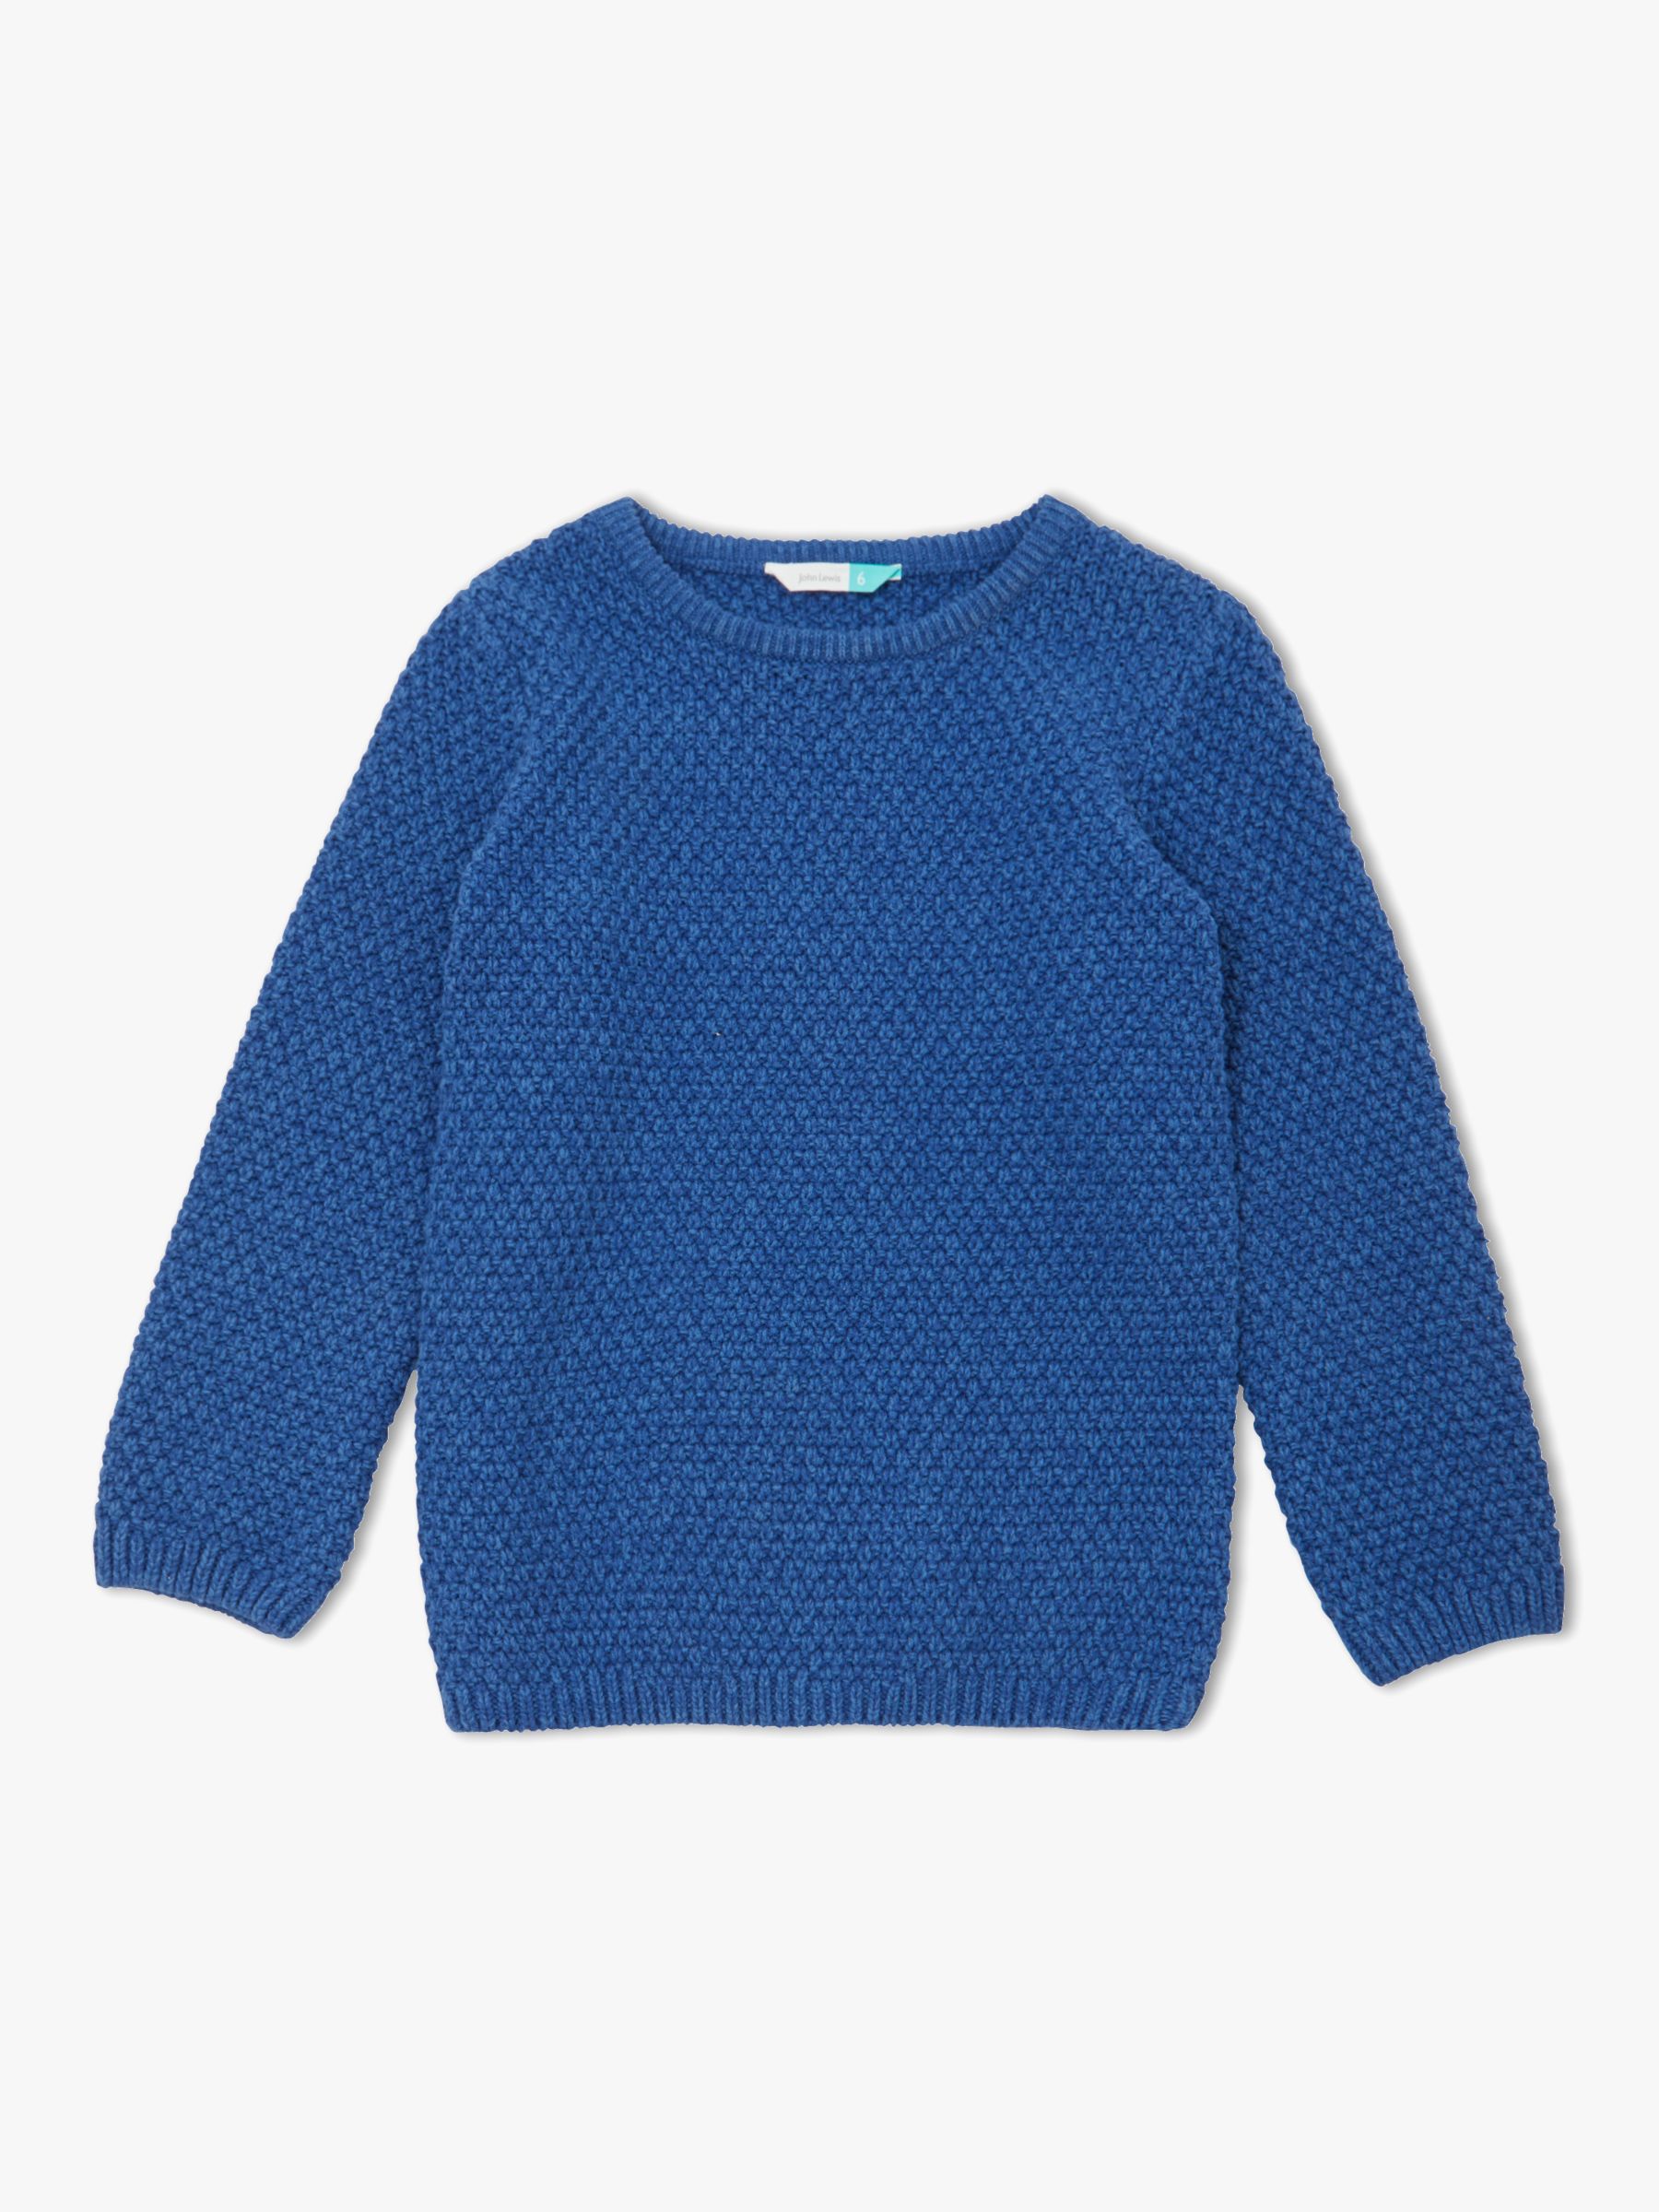 John Lewis & Partners Boys' Melange Knitted Jumper, Blue at John Lewis ...